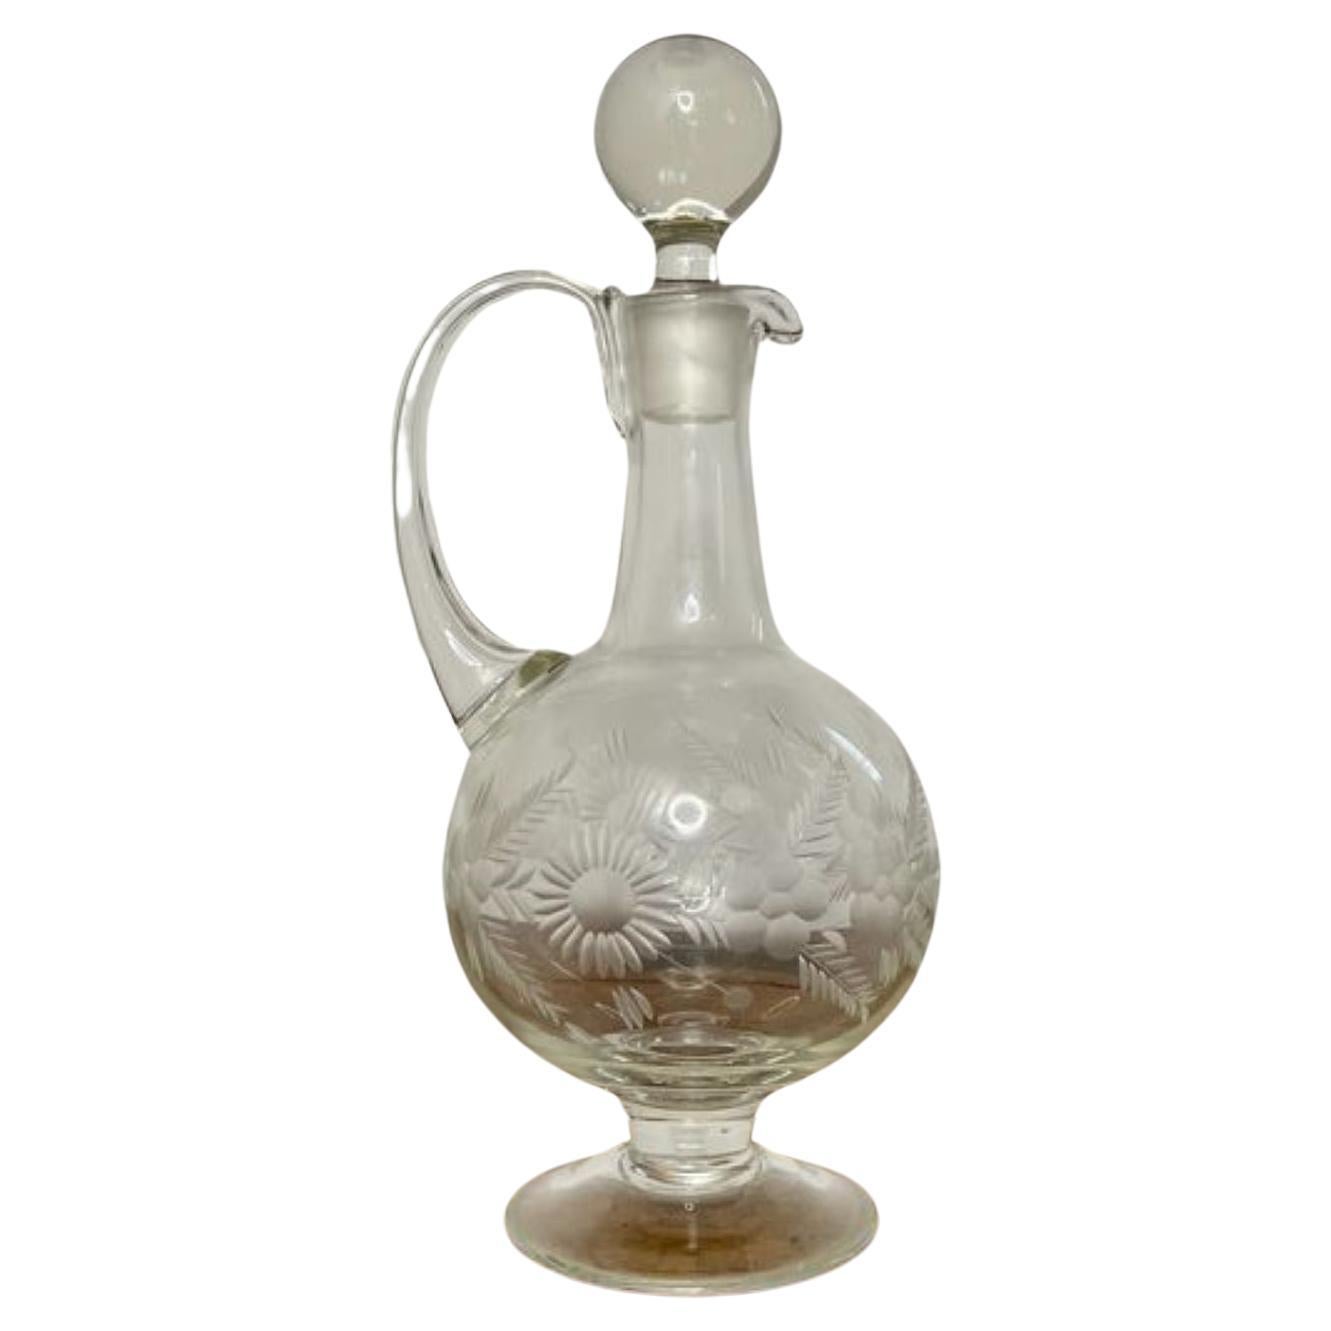 Fantastic quality antique Victorian glass ewer 